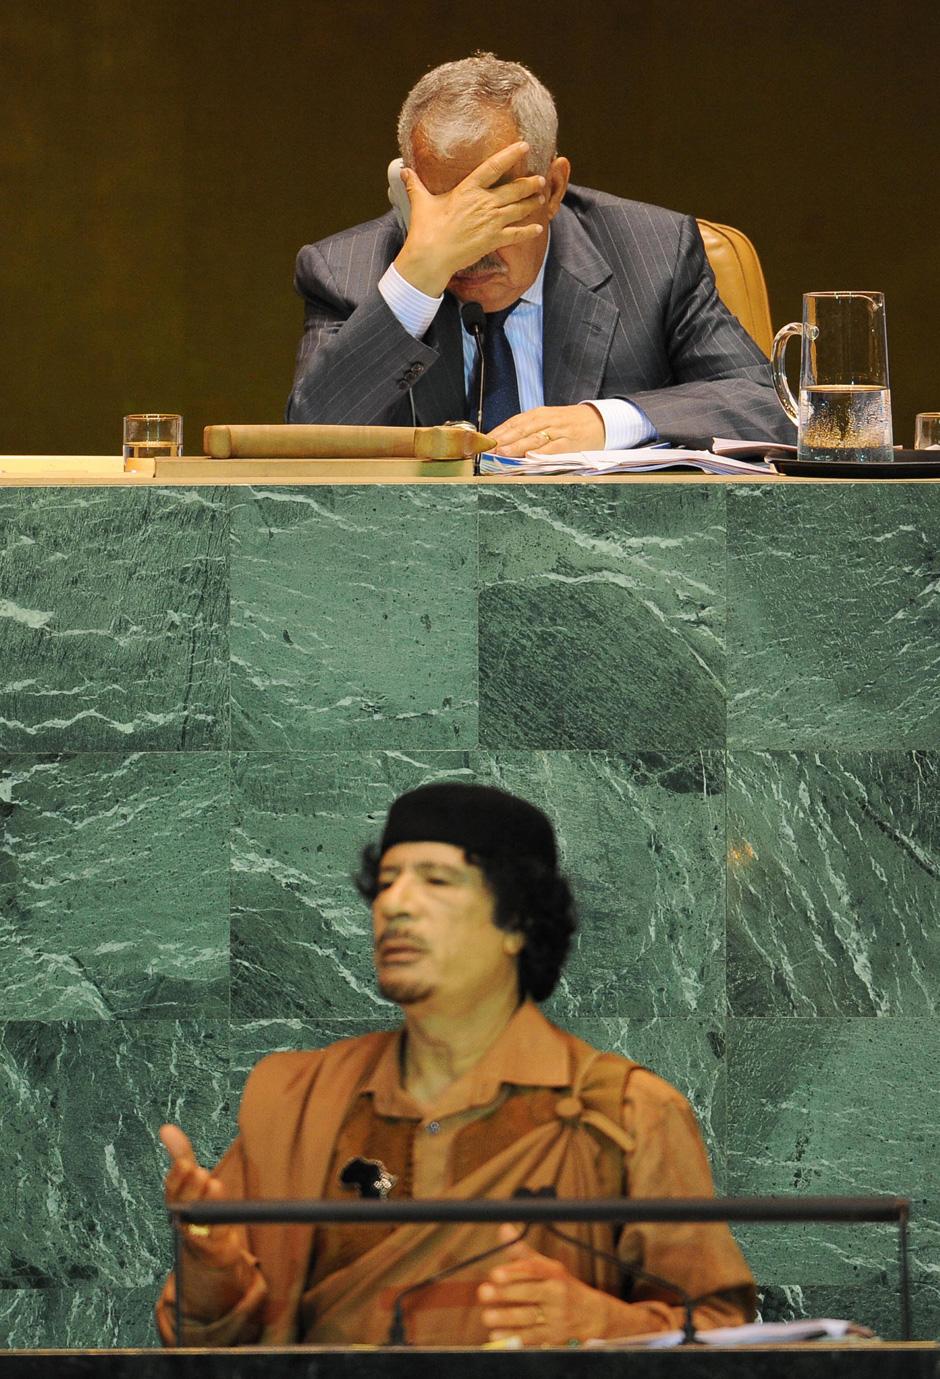 Al-Buraq Hussein Abu-Ommo and Libyan leader Muammar Al-Qaddafi speaks at the UN General Assembly, as the Assembly president, Ali Abdus-Salam At-Treki naps, New York, September 23, 2009.